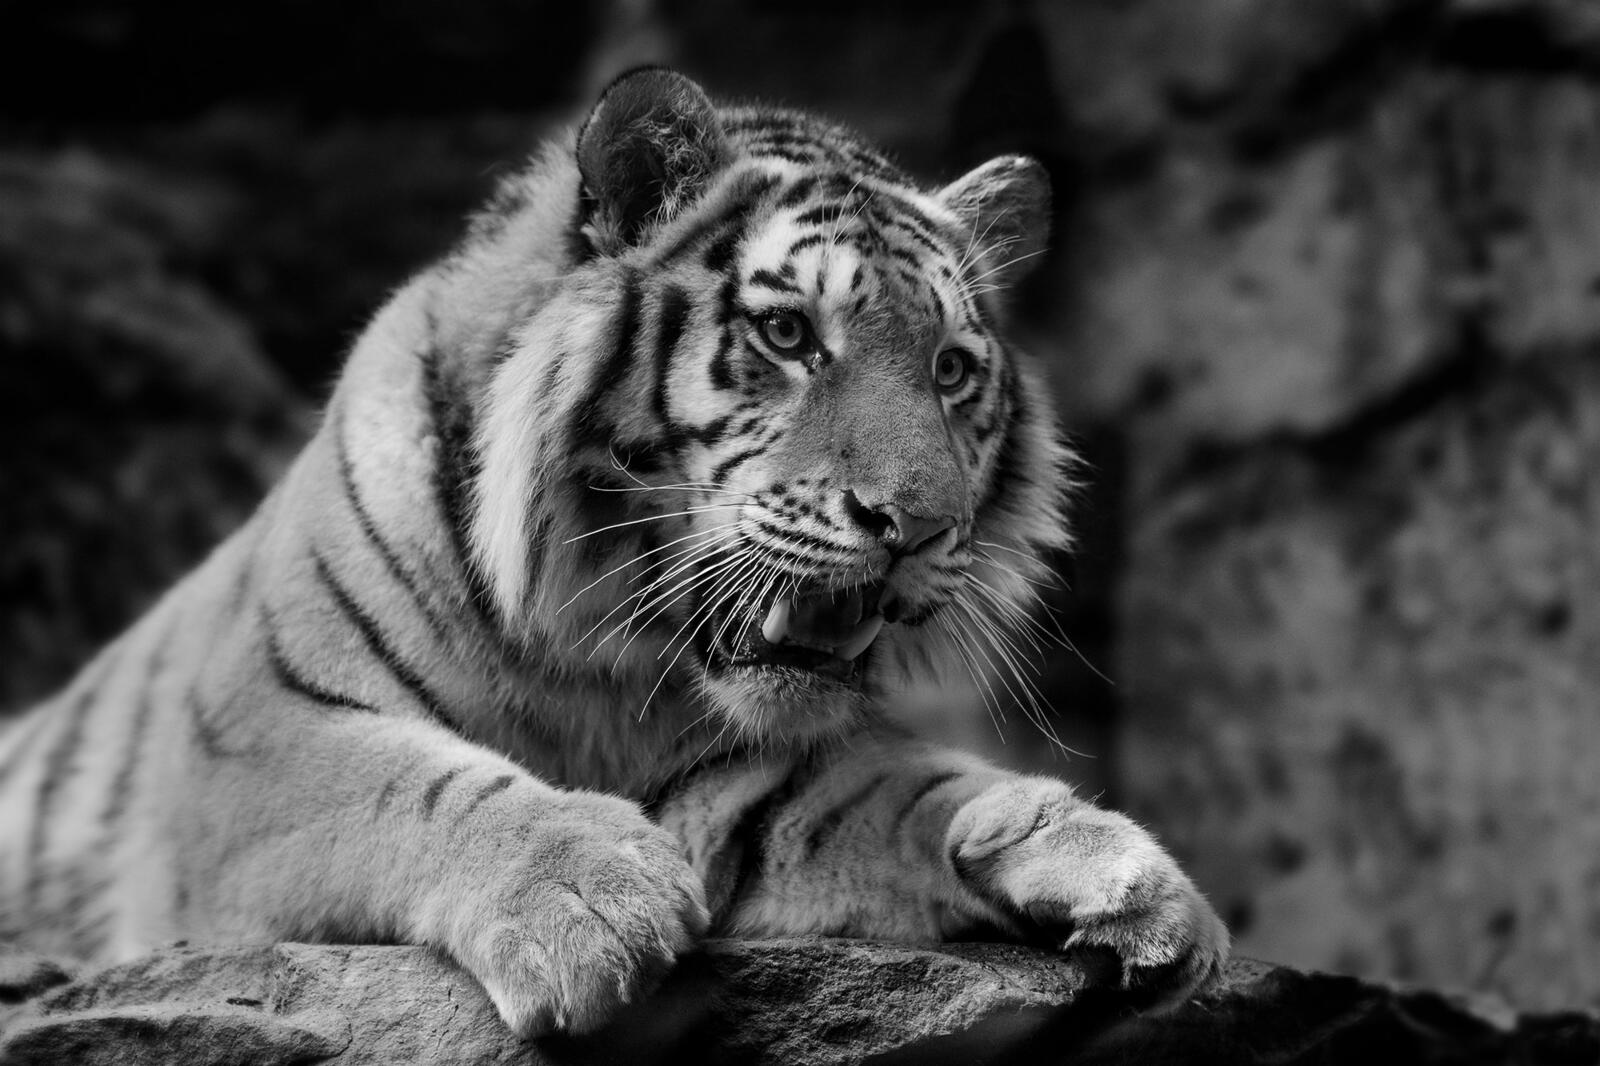 Free photo A vicious tiger in a monochrome photo